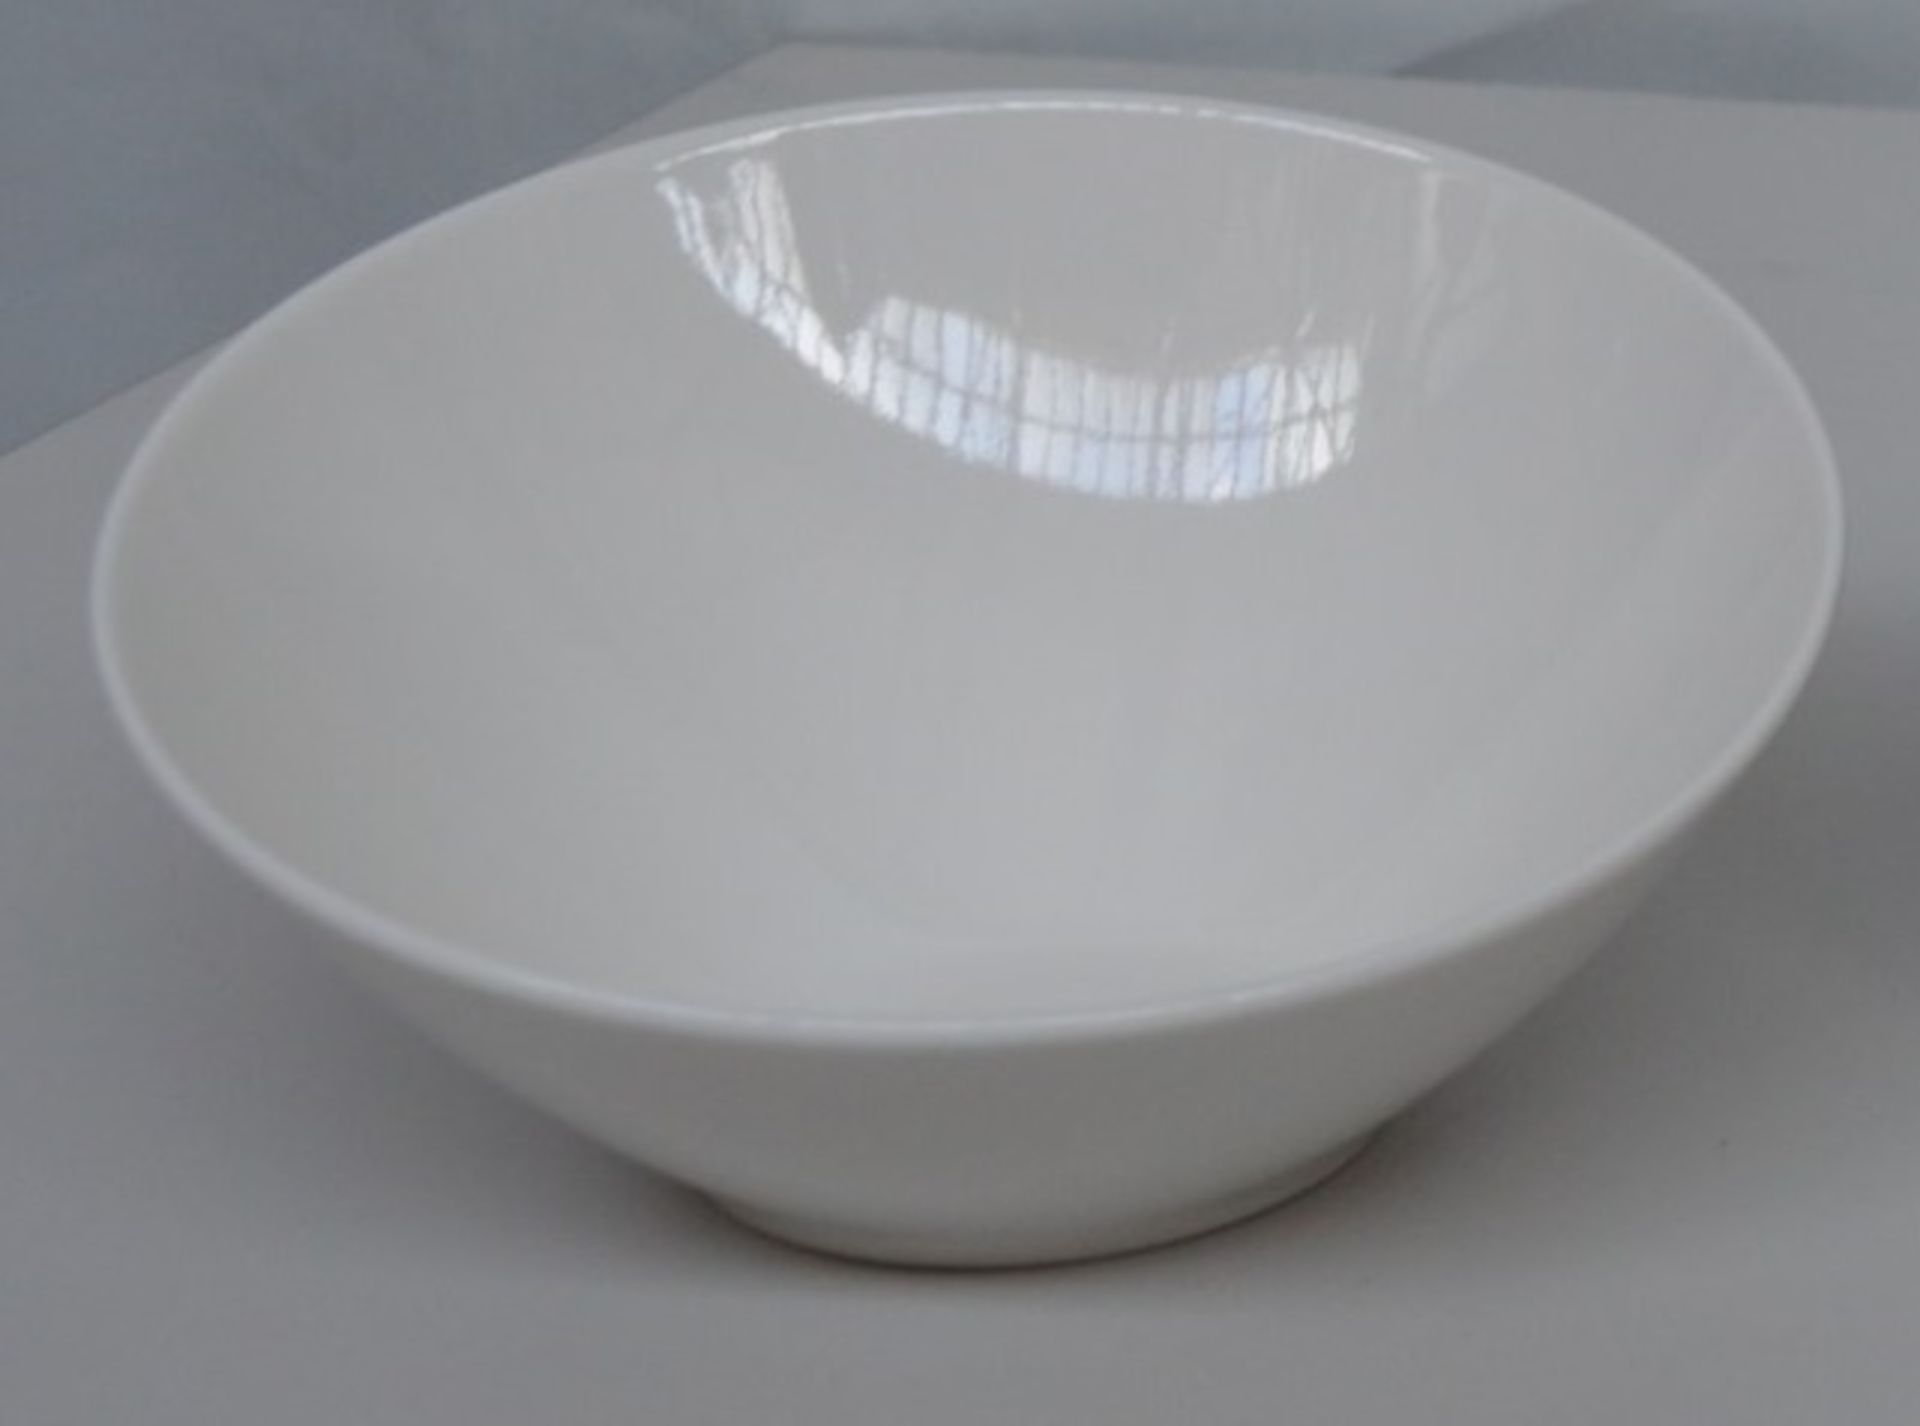 12 x Steelite Sheer Distinction Monaco White Bowls - 21.5cm - Product Code 9001C620 - New Boxed - Image 4 of 5